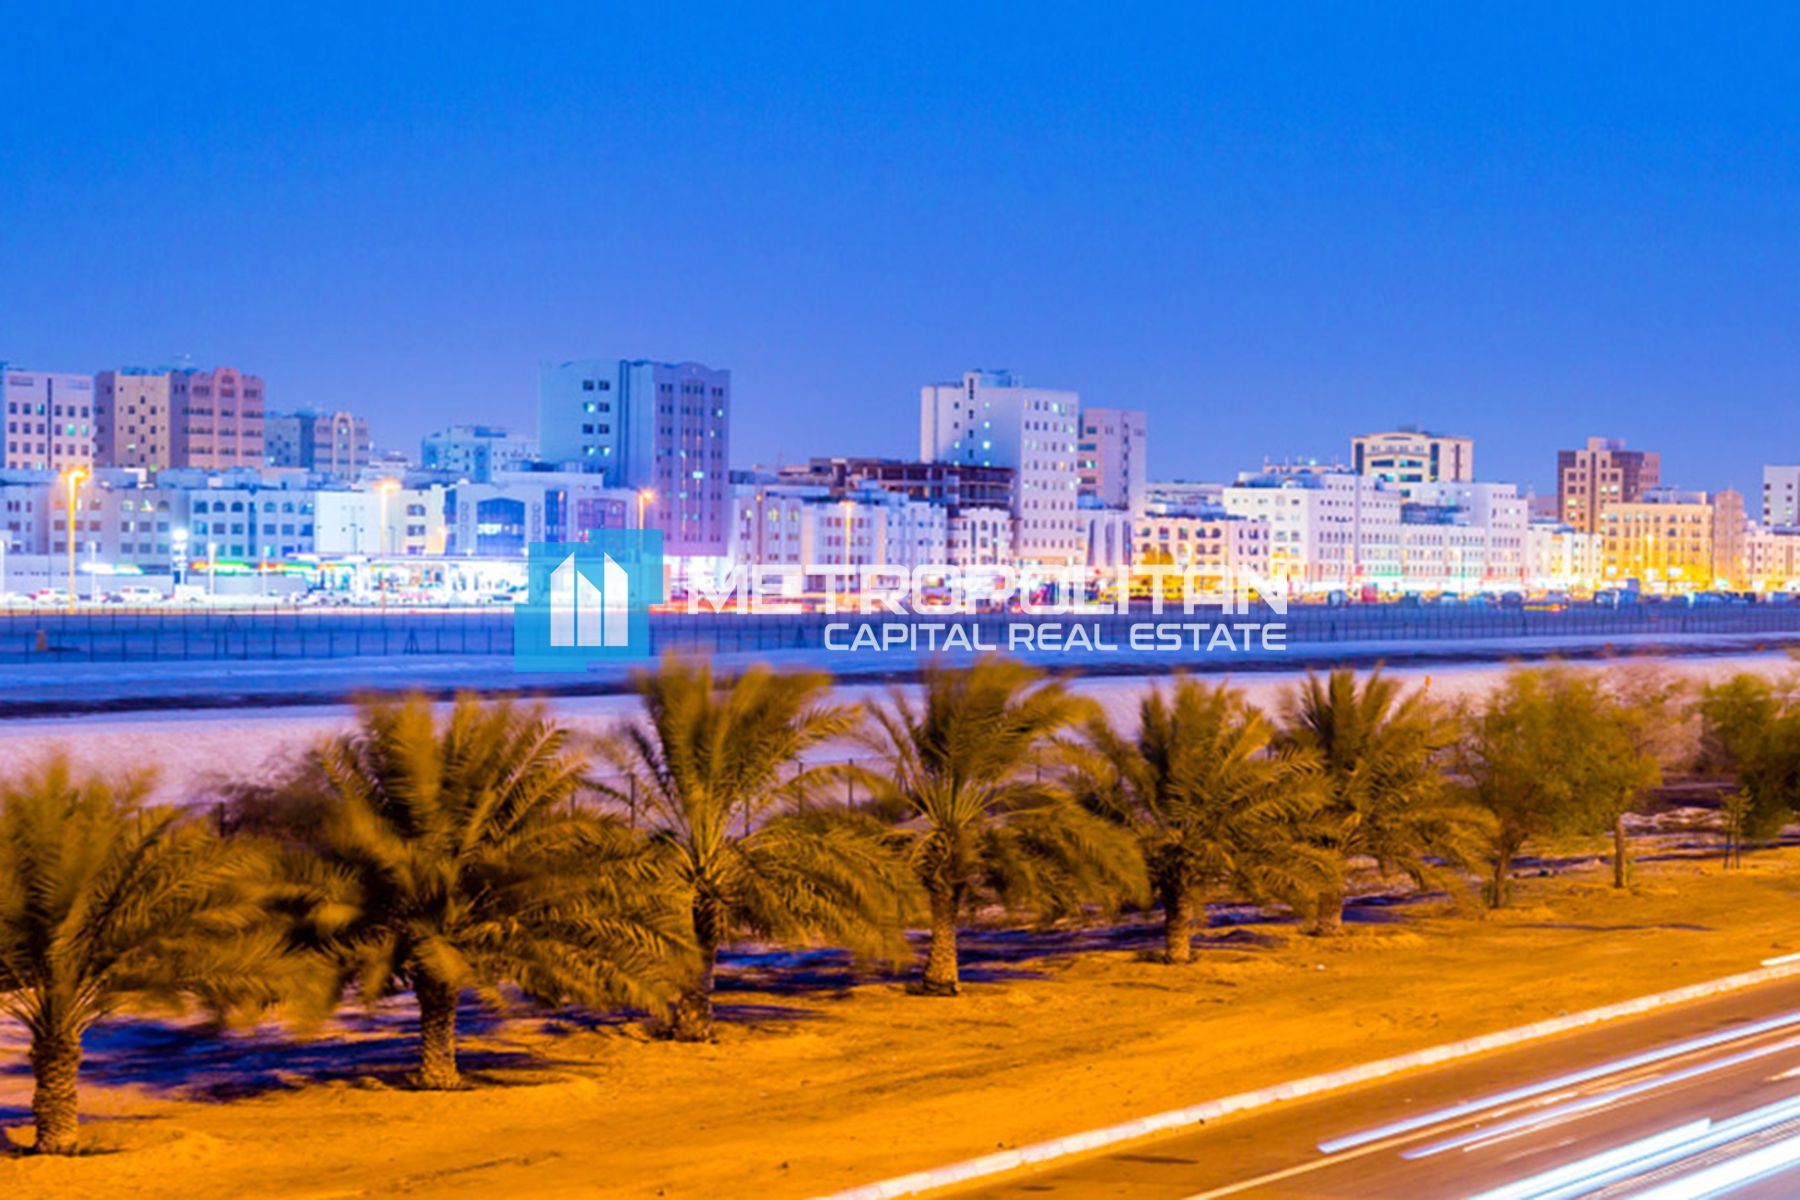 Image - Mussafah Industrial Area, Mussafah, Abu Dhabi | Project - مكتب